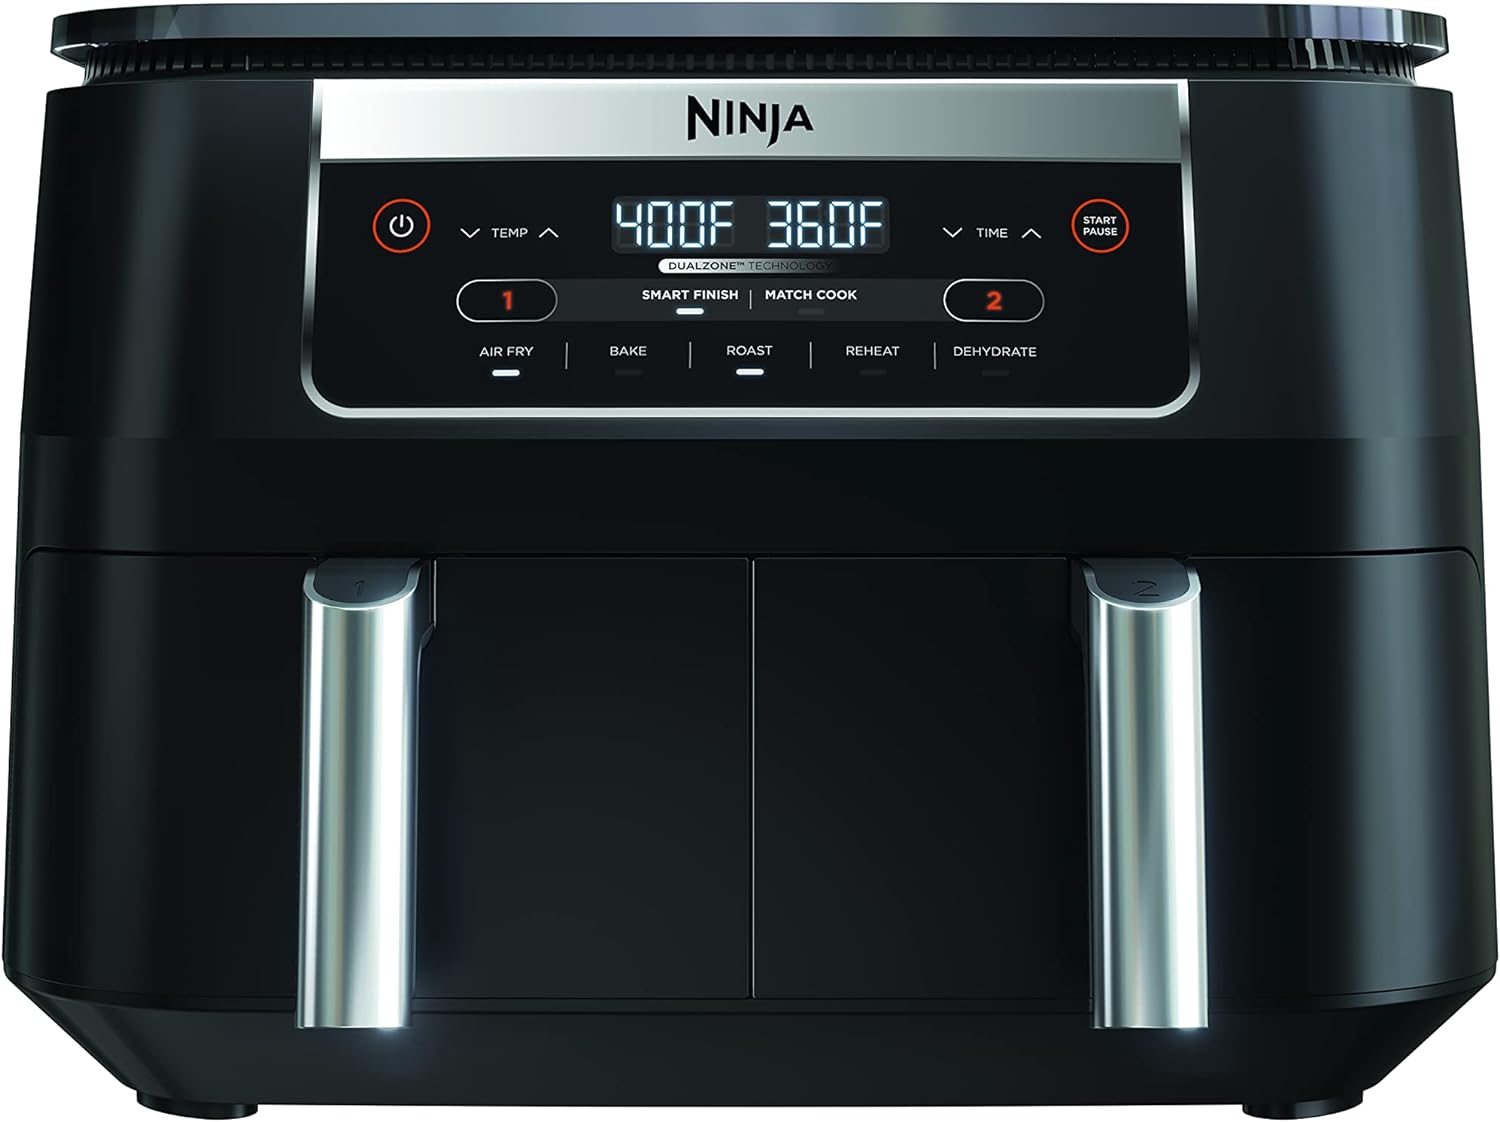 Ninja Foodi DZ090C 5-in-1, 6-qt. 2-Basket Air Fryer with DualZone Technology, Black
